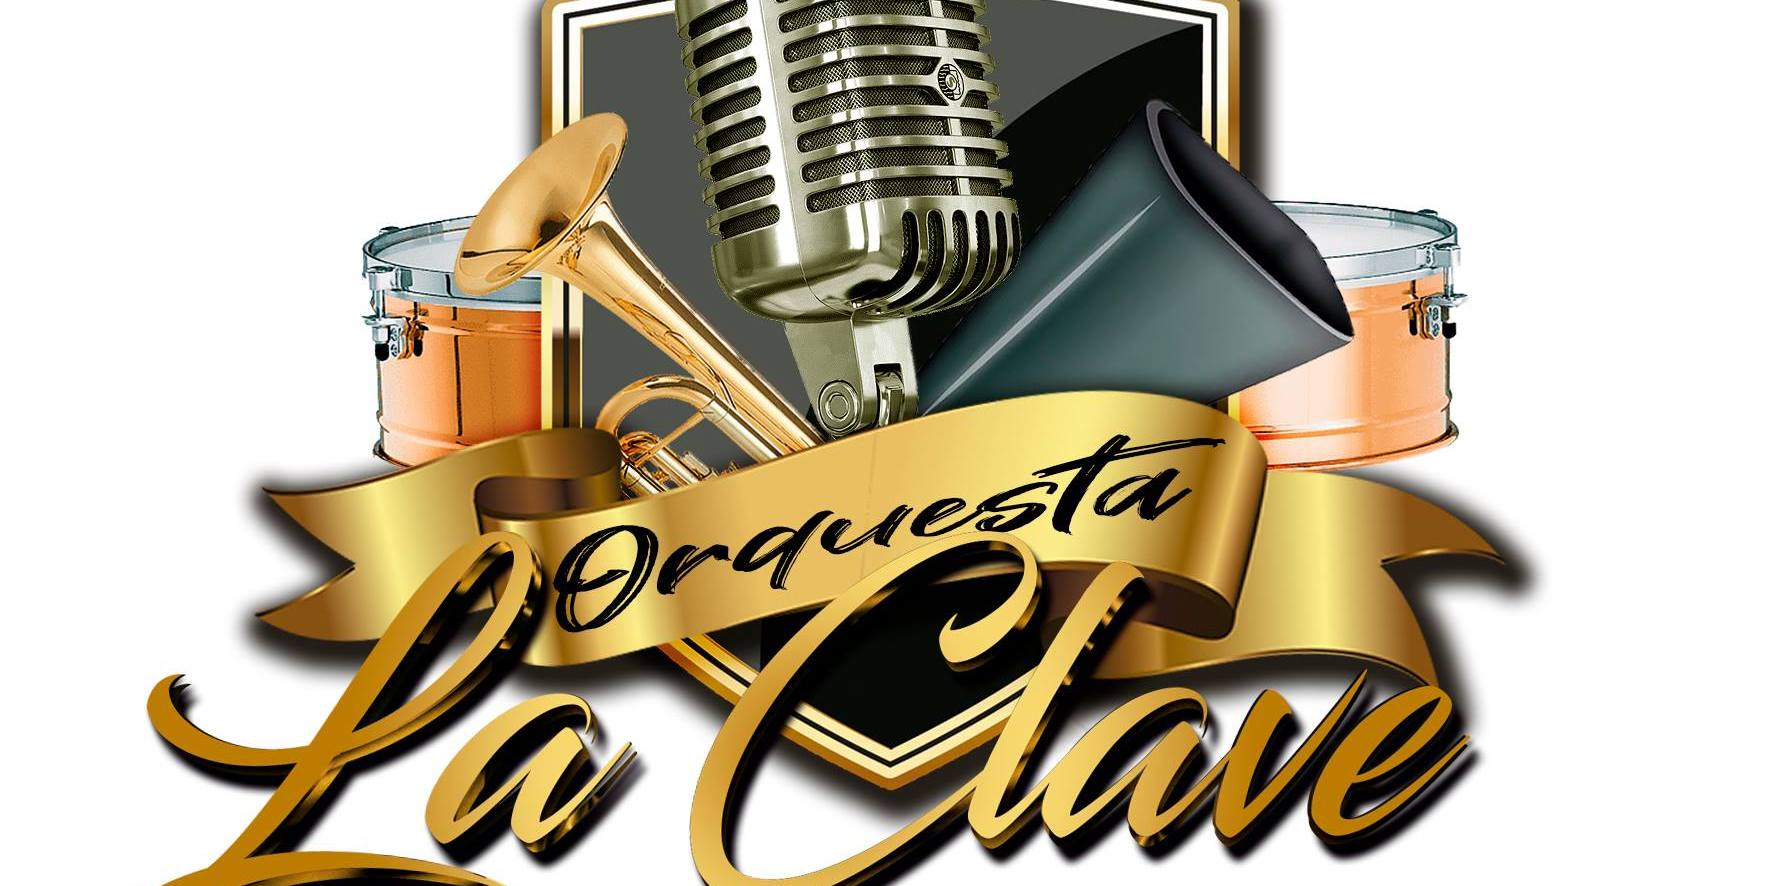 La Clave Orchestra promotional image